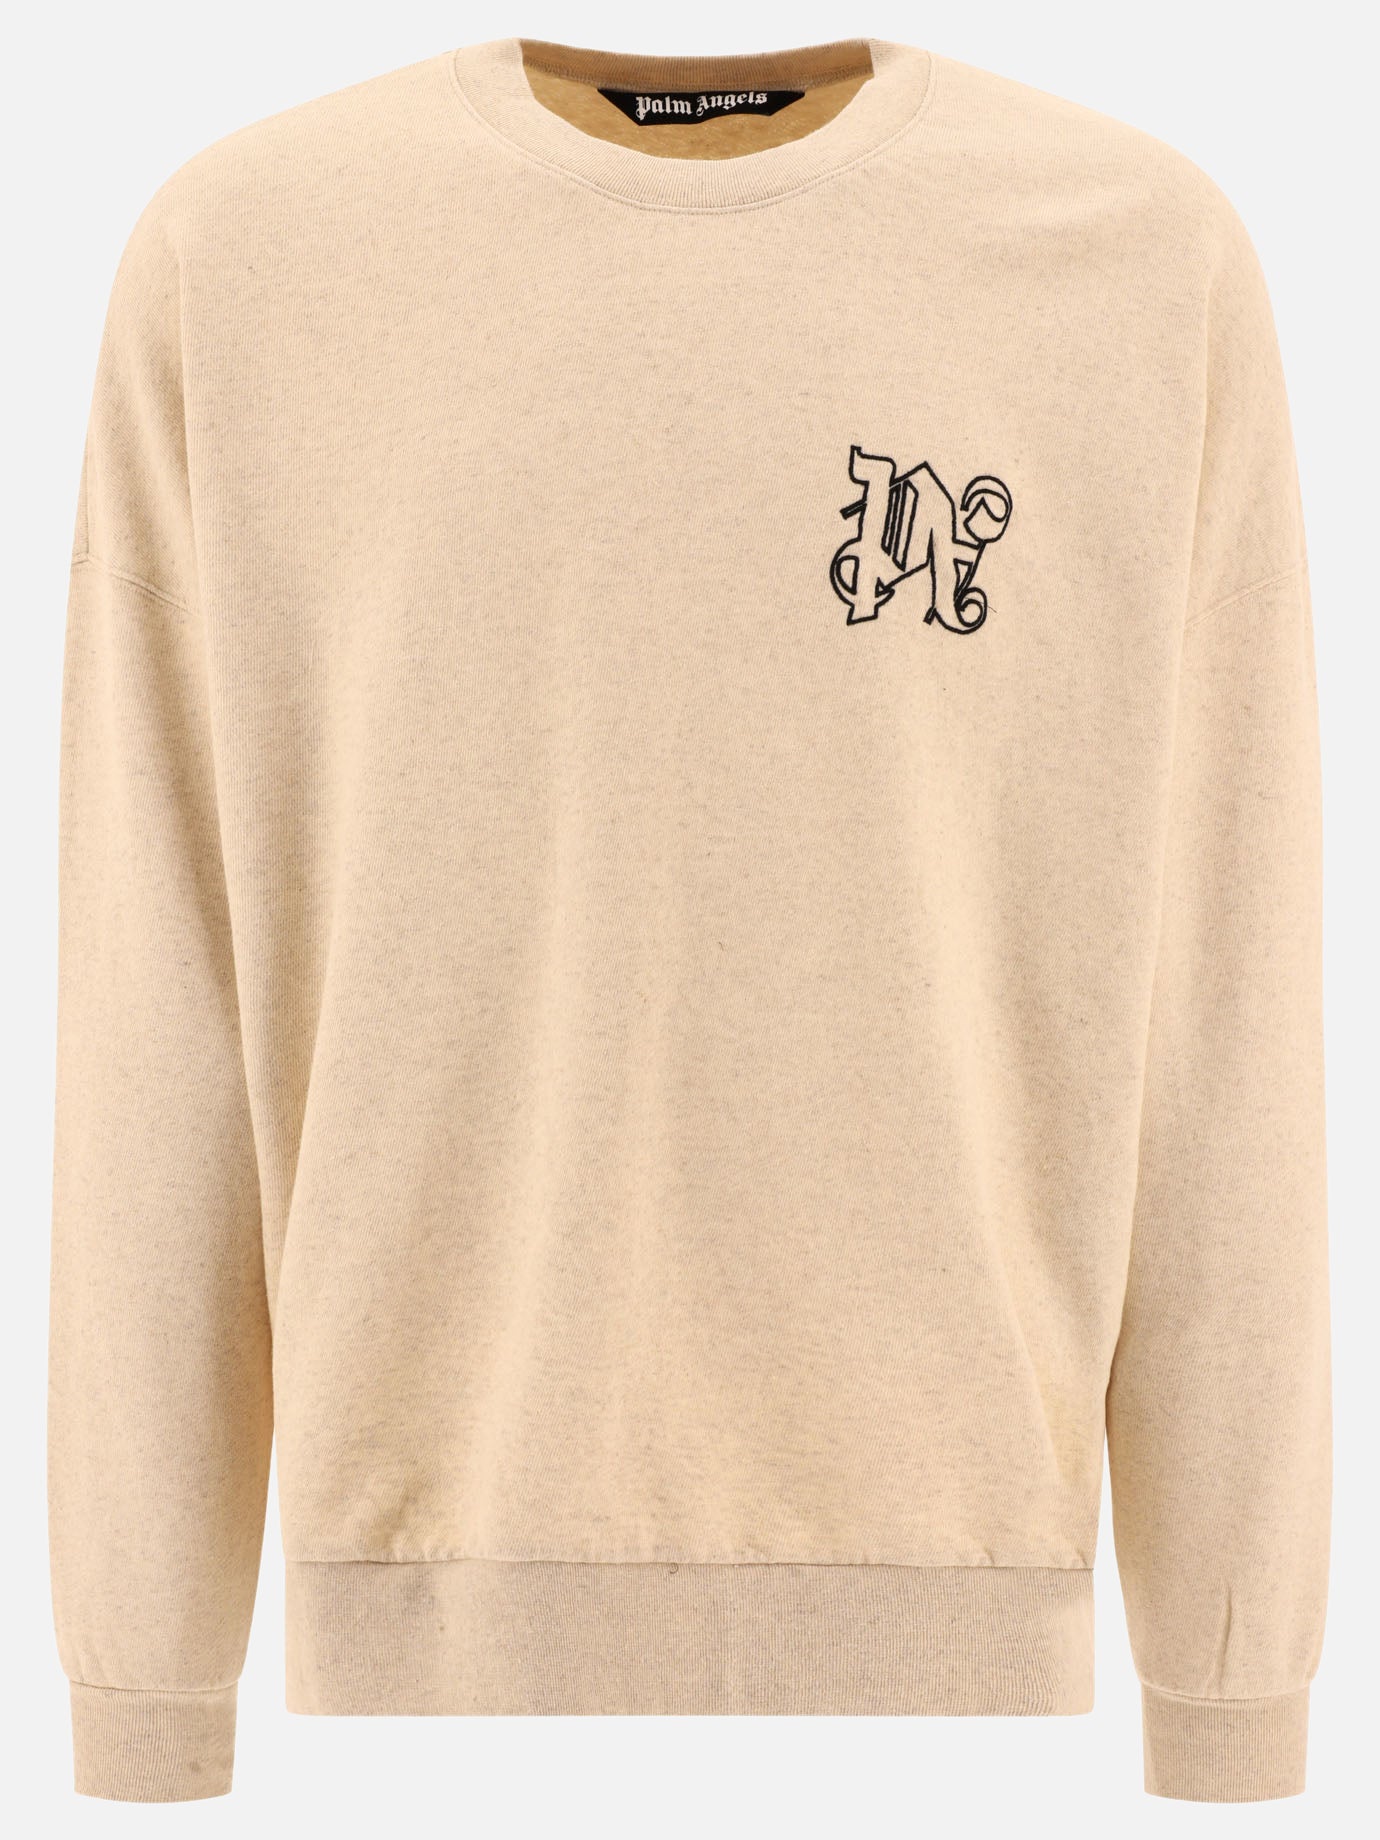 "PA Monogram" sweatshirt